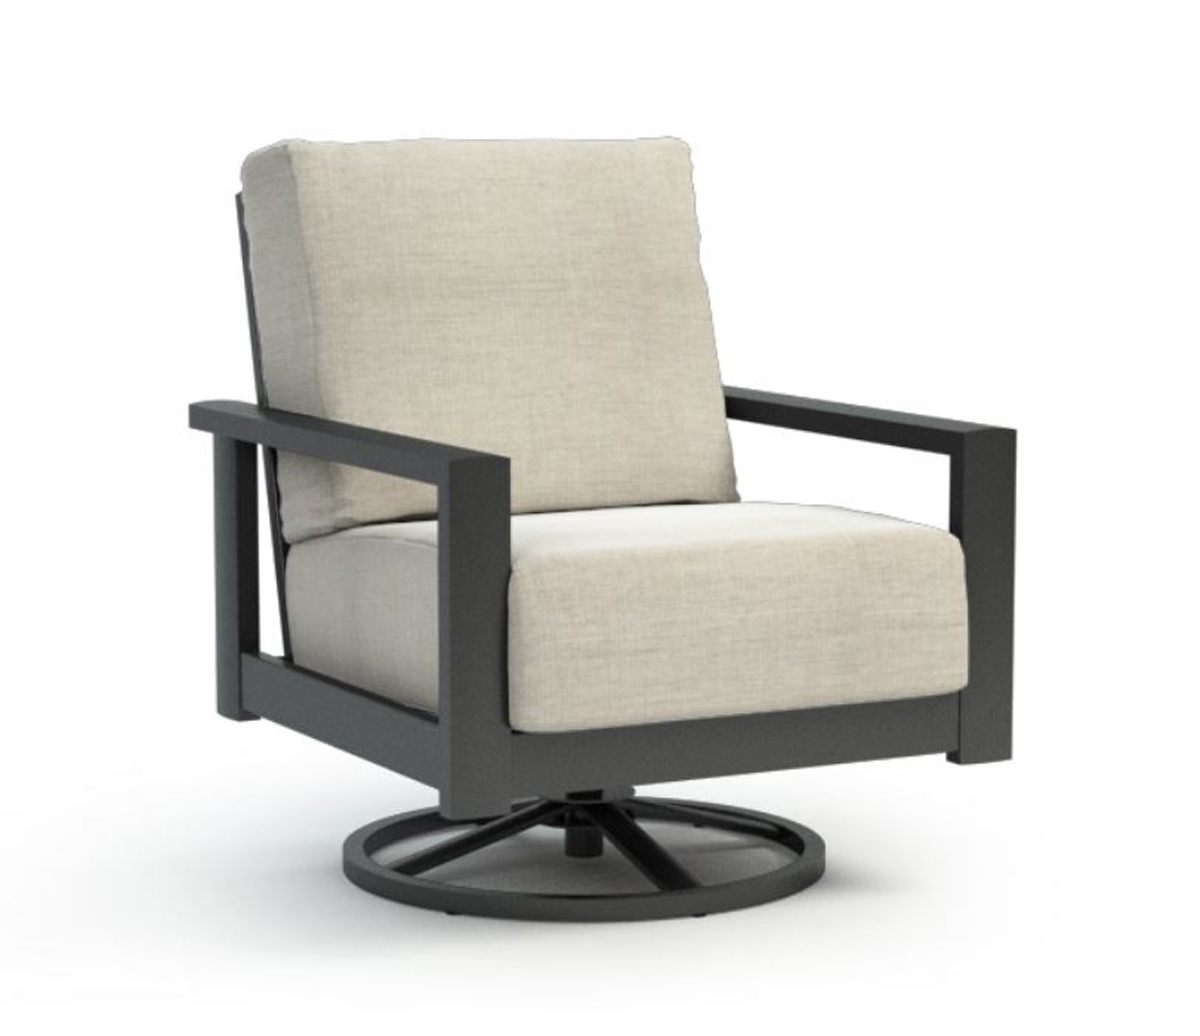 elements cushion lounge chair set product image